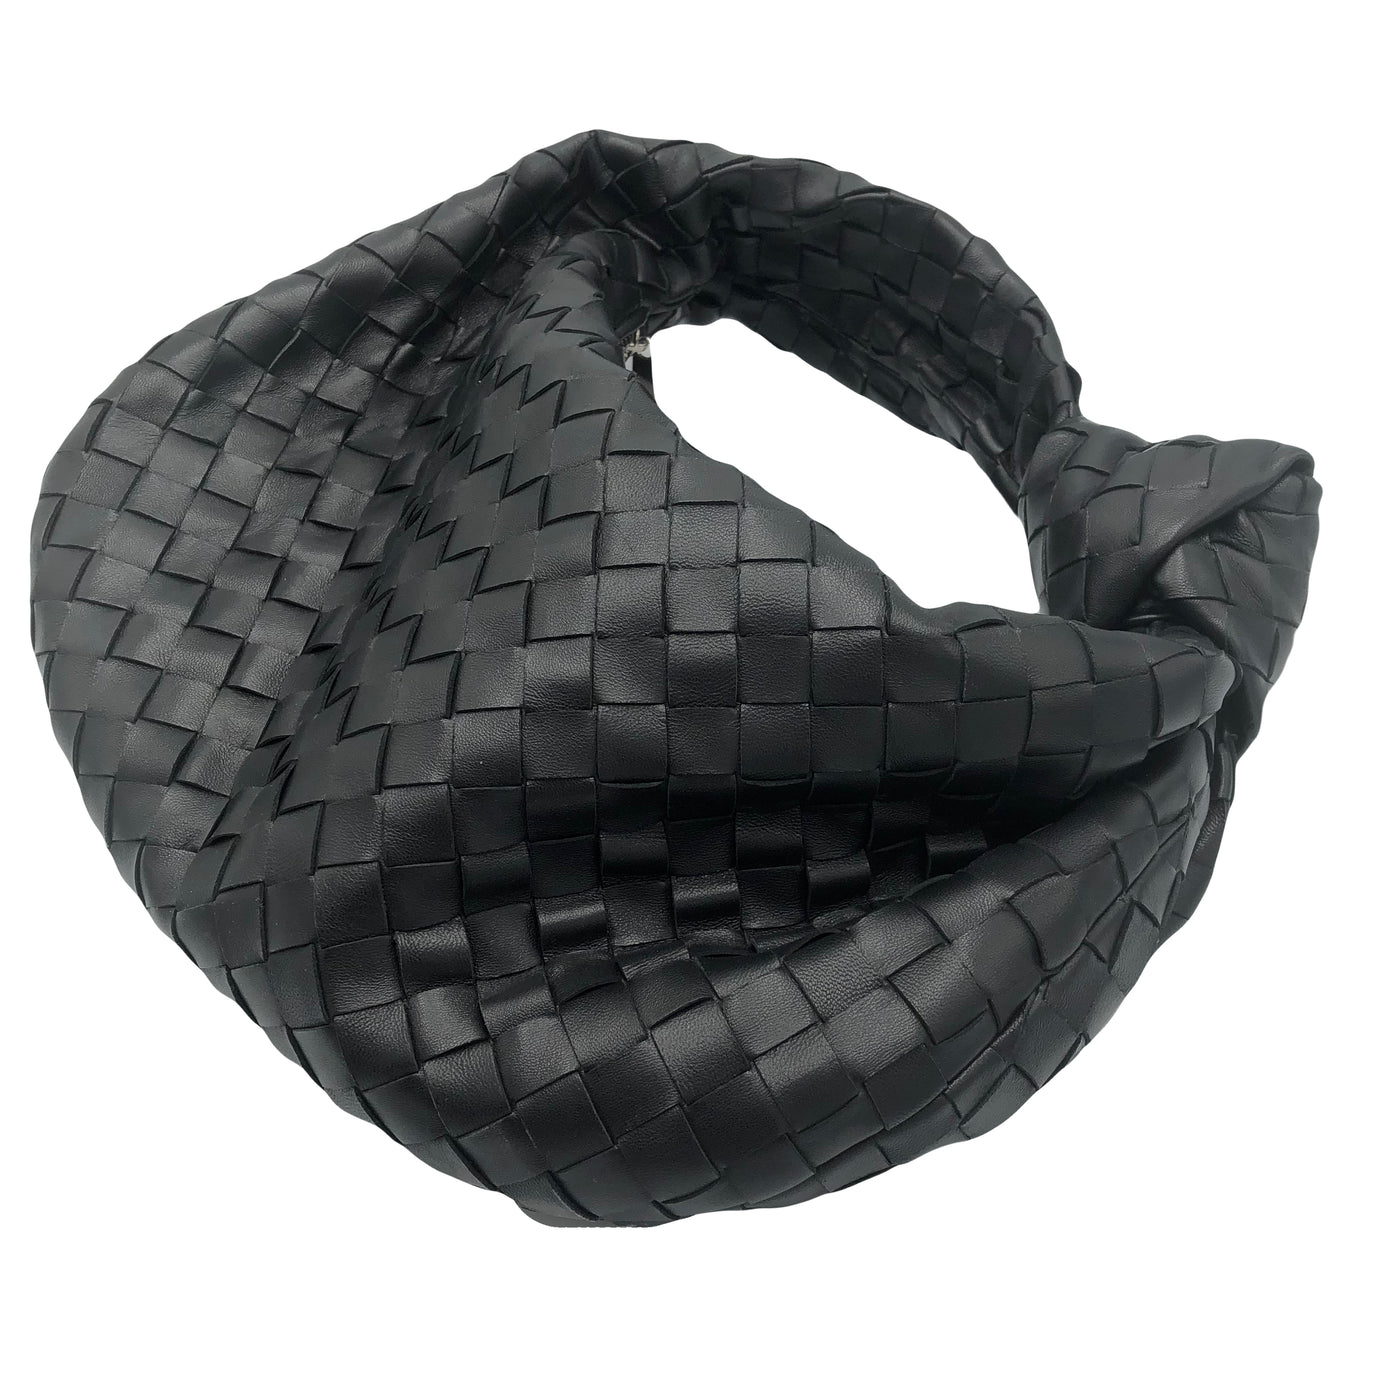 BOTTEGA VENETA Jodie Teen Knotted Leather Black Handbag RRP: £2700